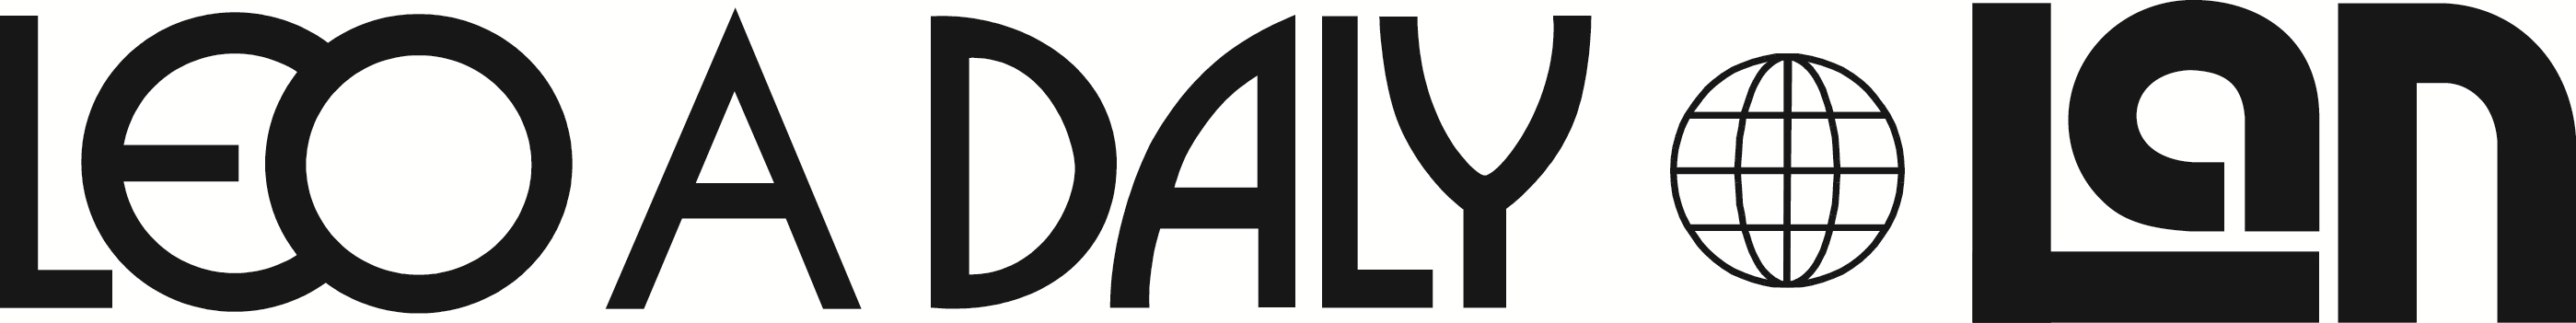 LEO A DALY/Lockwood Andrews & Newnam (LAN) logo